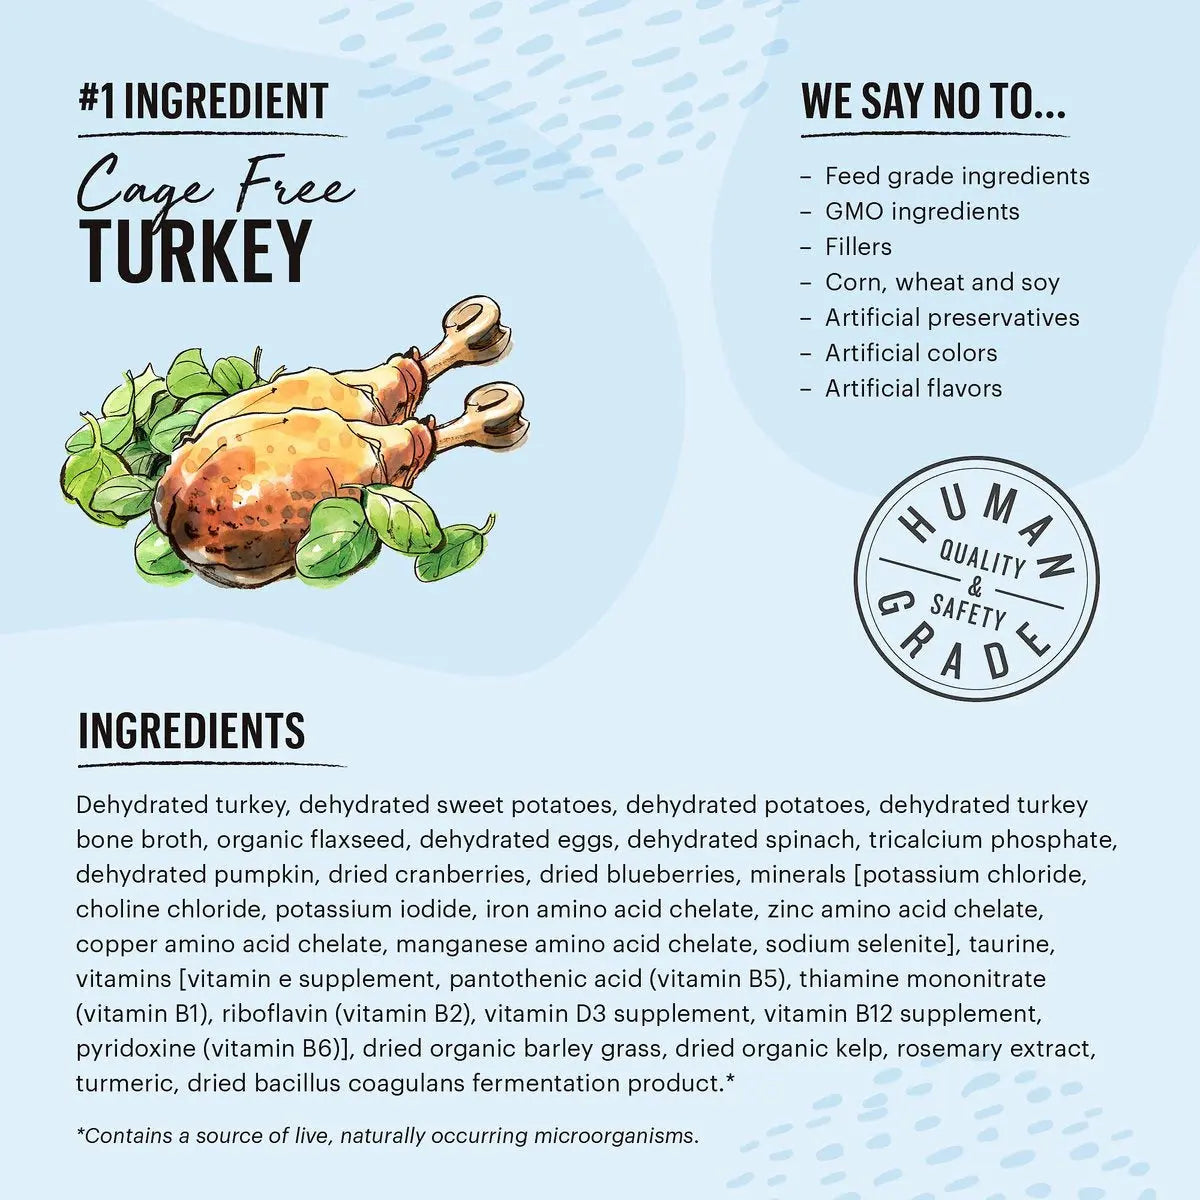 The Honest Kitchen Dehydrated Grain Free Turkey Cat Food The Honest Kitchen